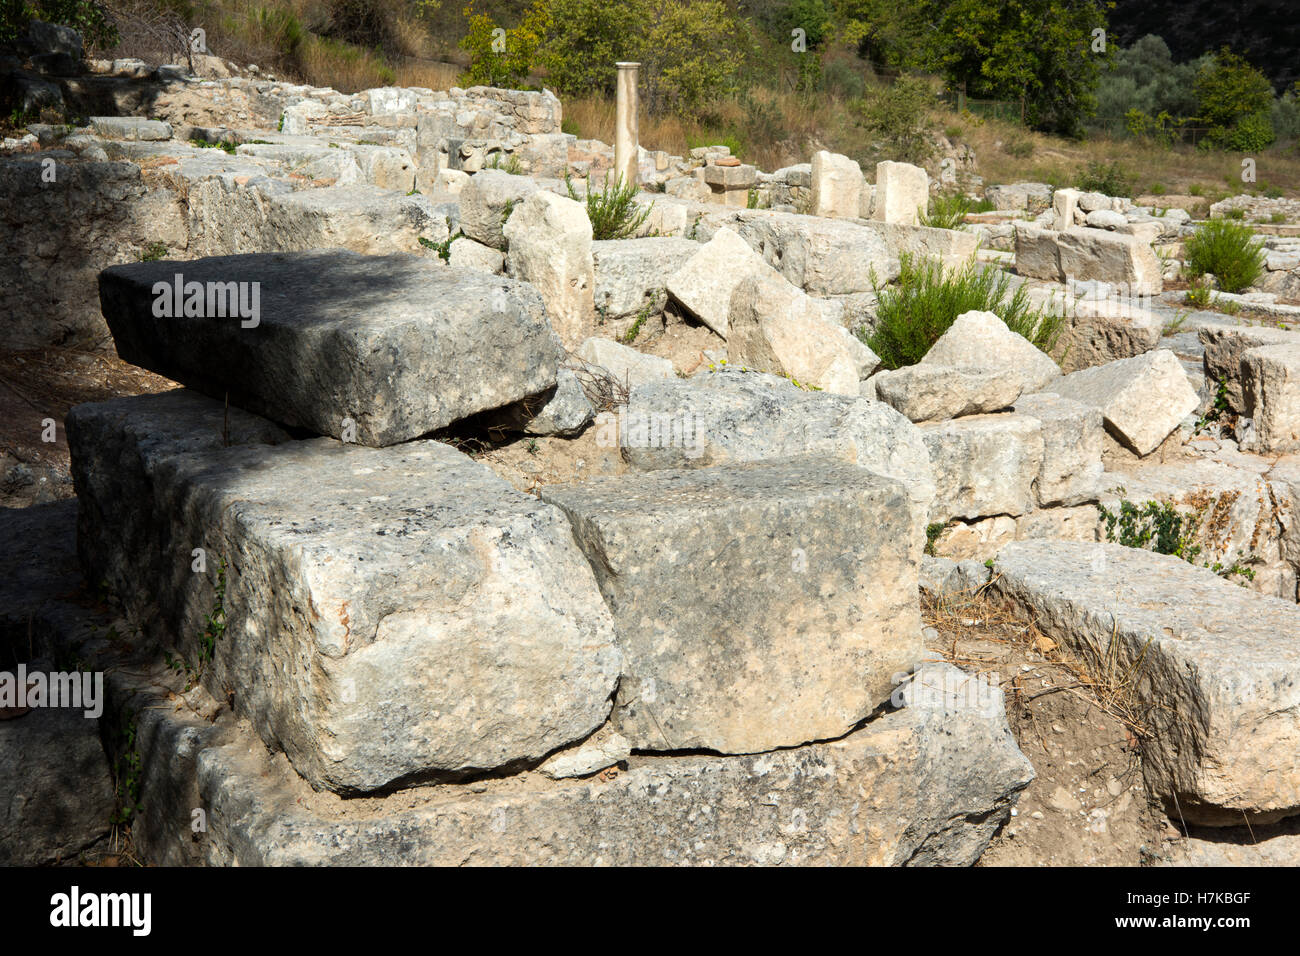 Griechenland, Kreta, Archea Eleftherna (Eleutherna), war eine antike griechische Stadt. Foto de stock